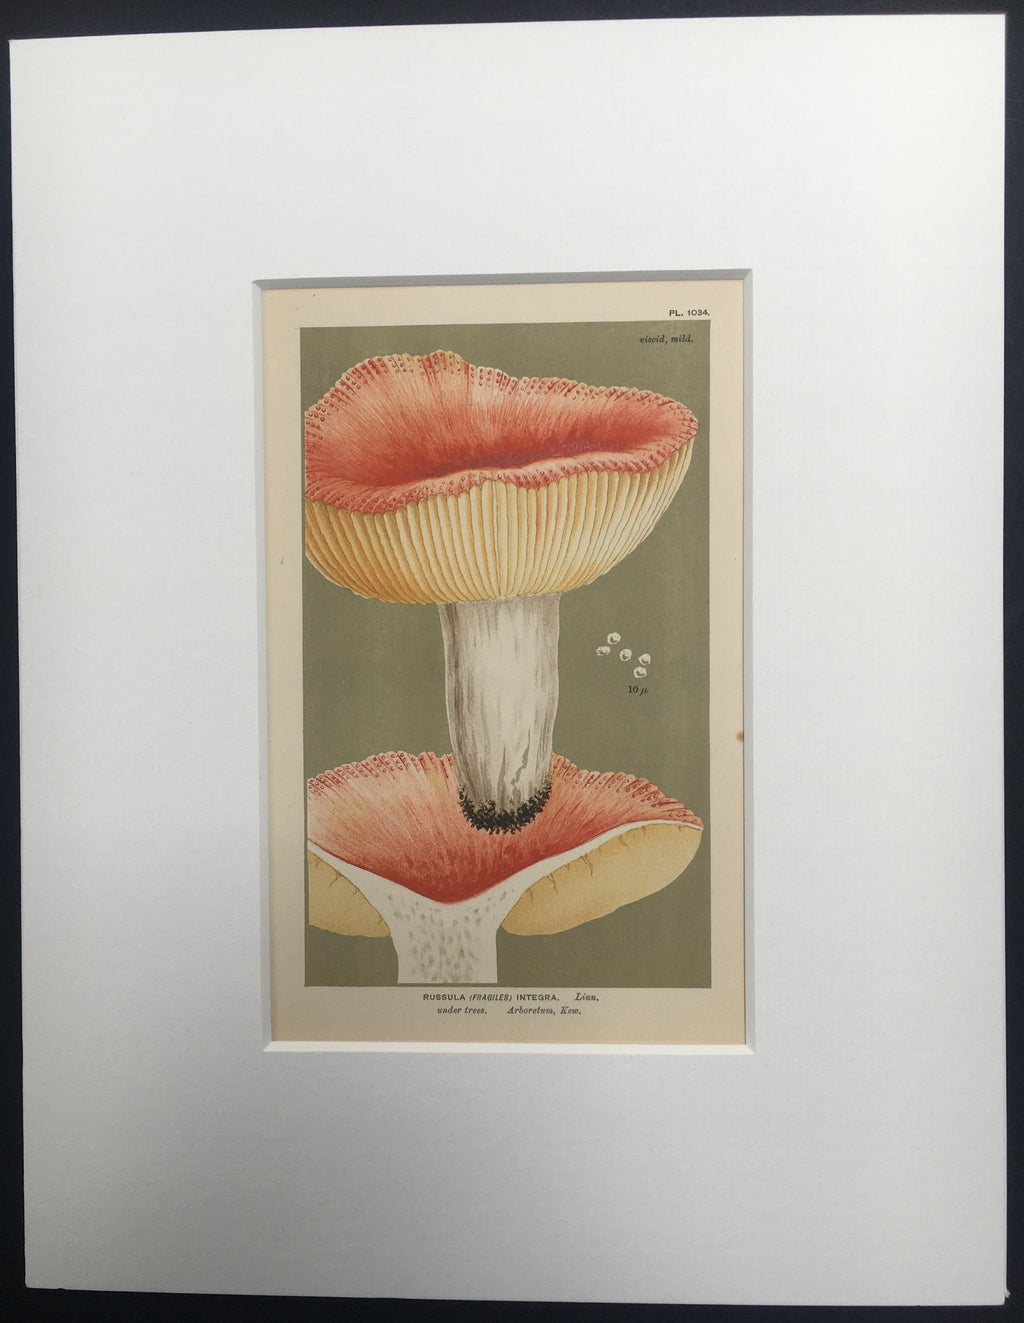 Late c19th Original Book Plate Mushroom - Russula (Fragiles) Integra - KEW